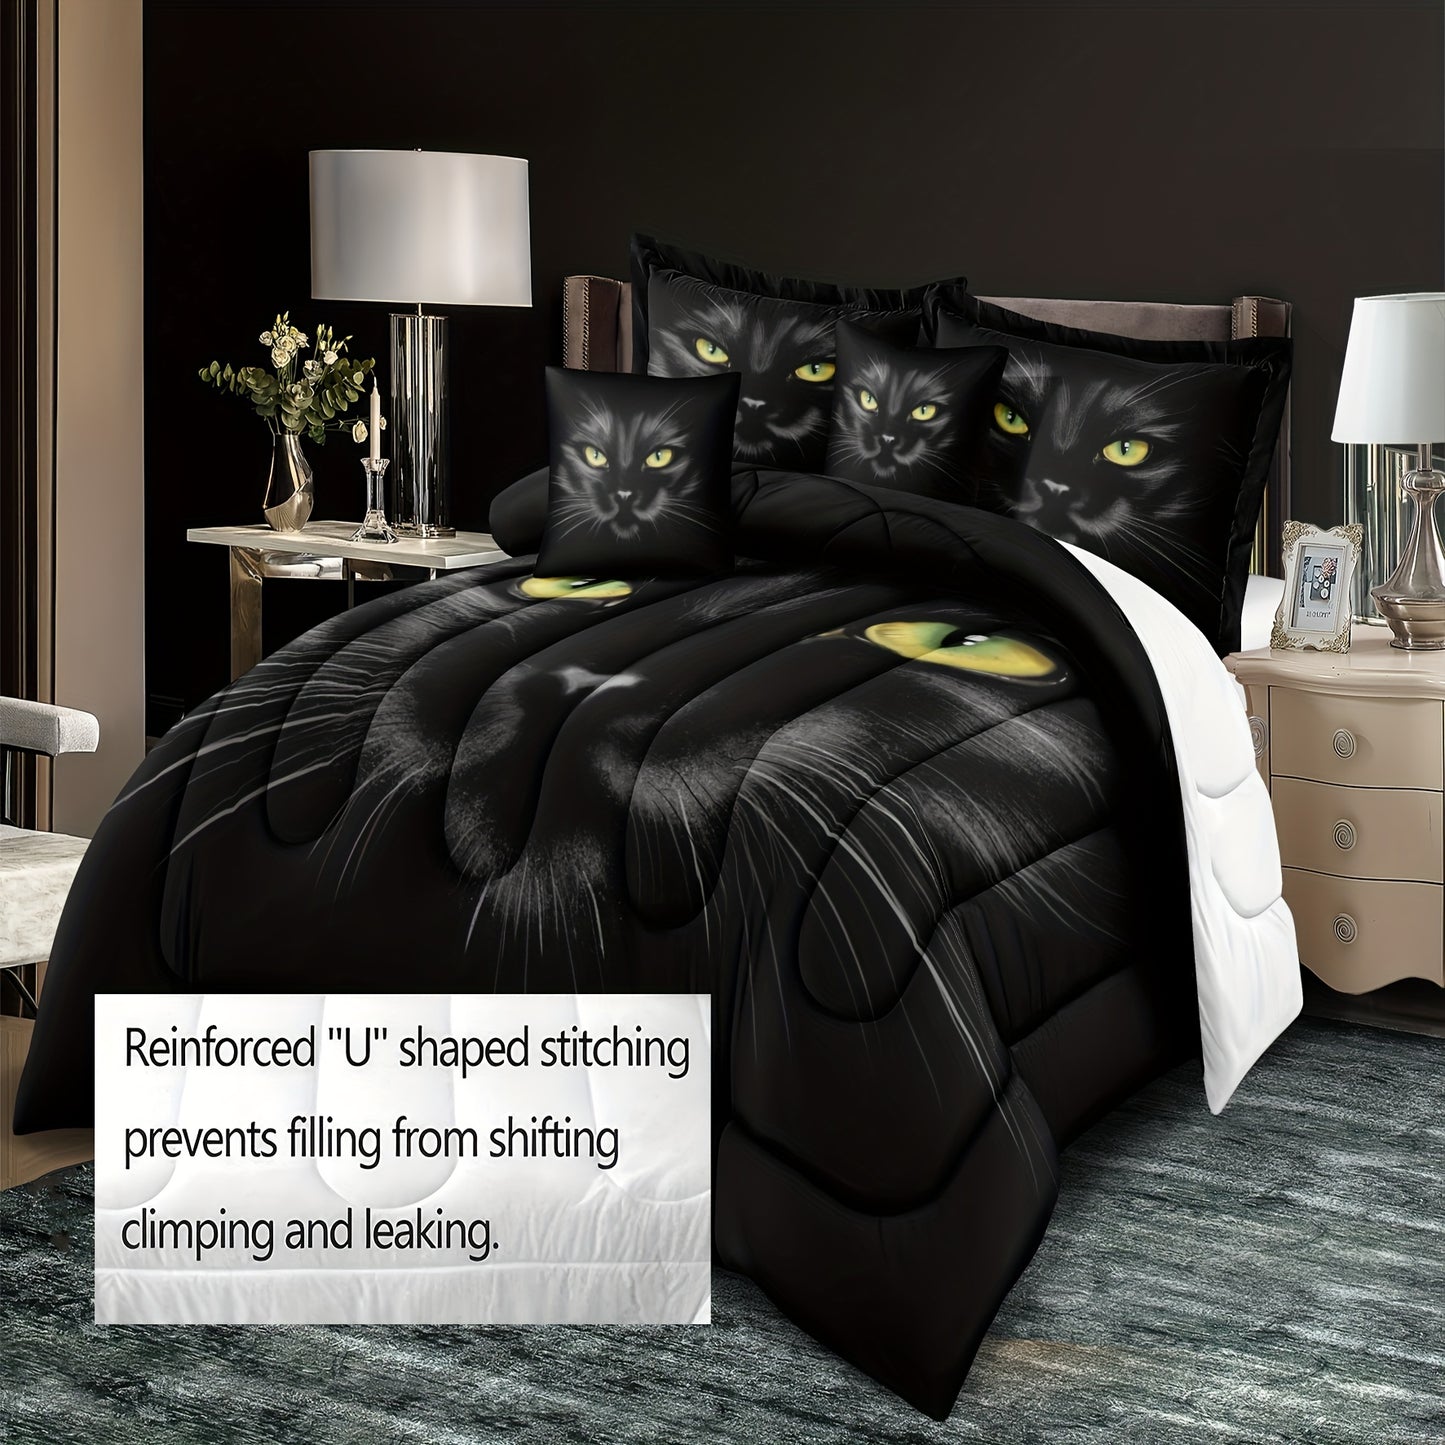 1pc Black Cat Print Comforter For Teens Boys Kids, Soft Comfortable Bedding, For Bedroom, Guest Room